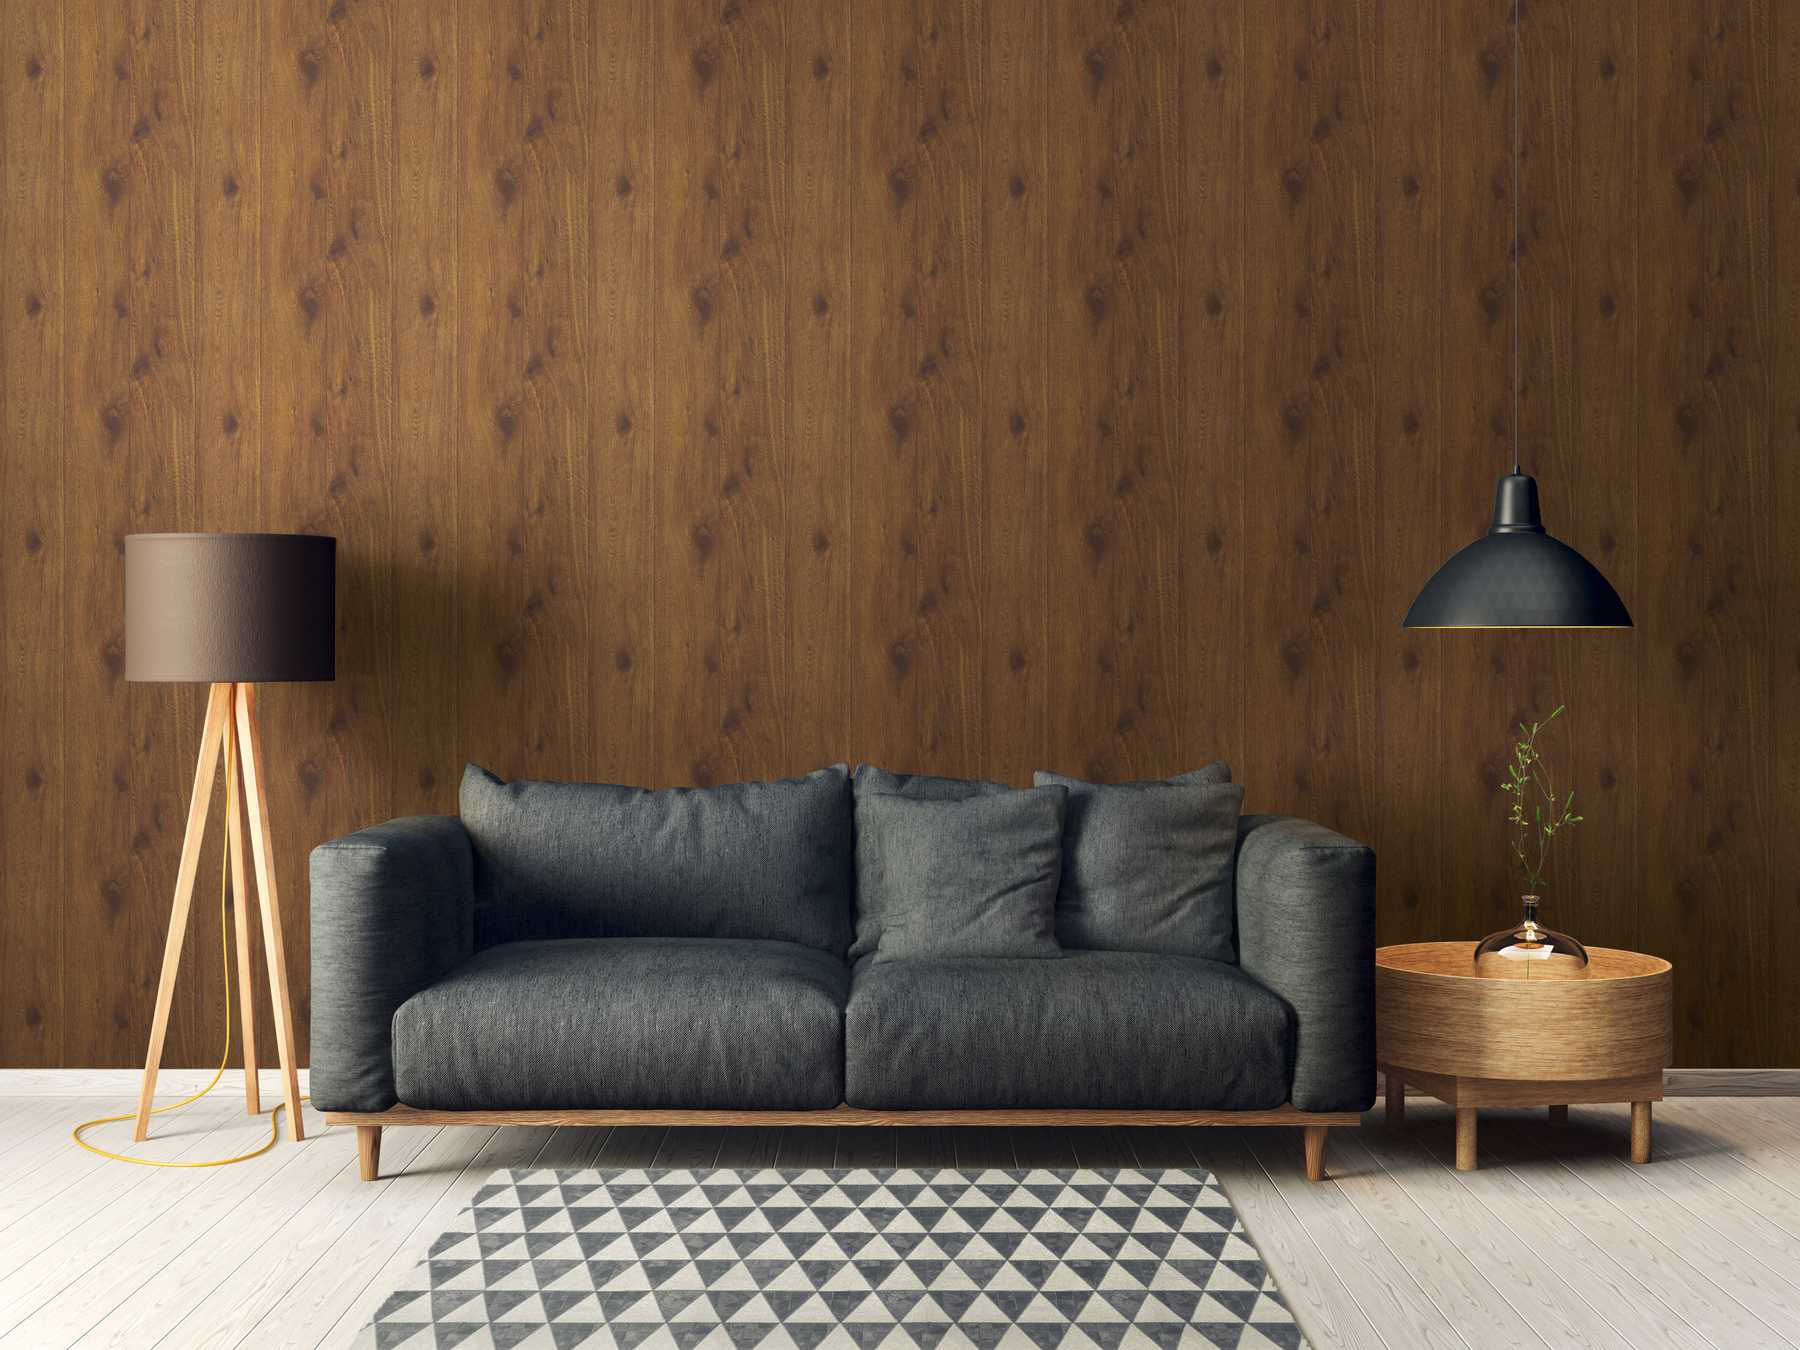             Wood look wallpaper with natural wood grain - brown
        